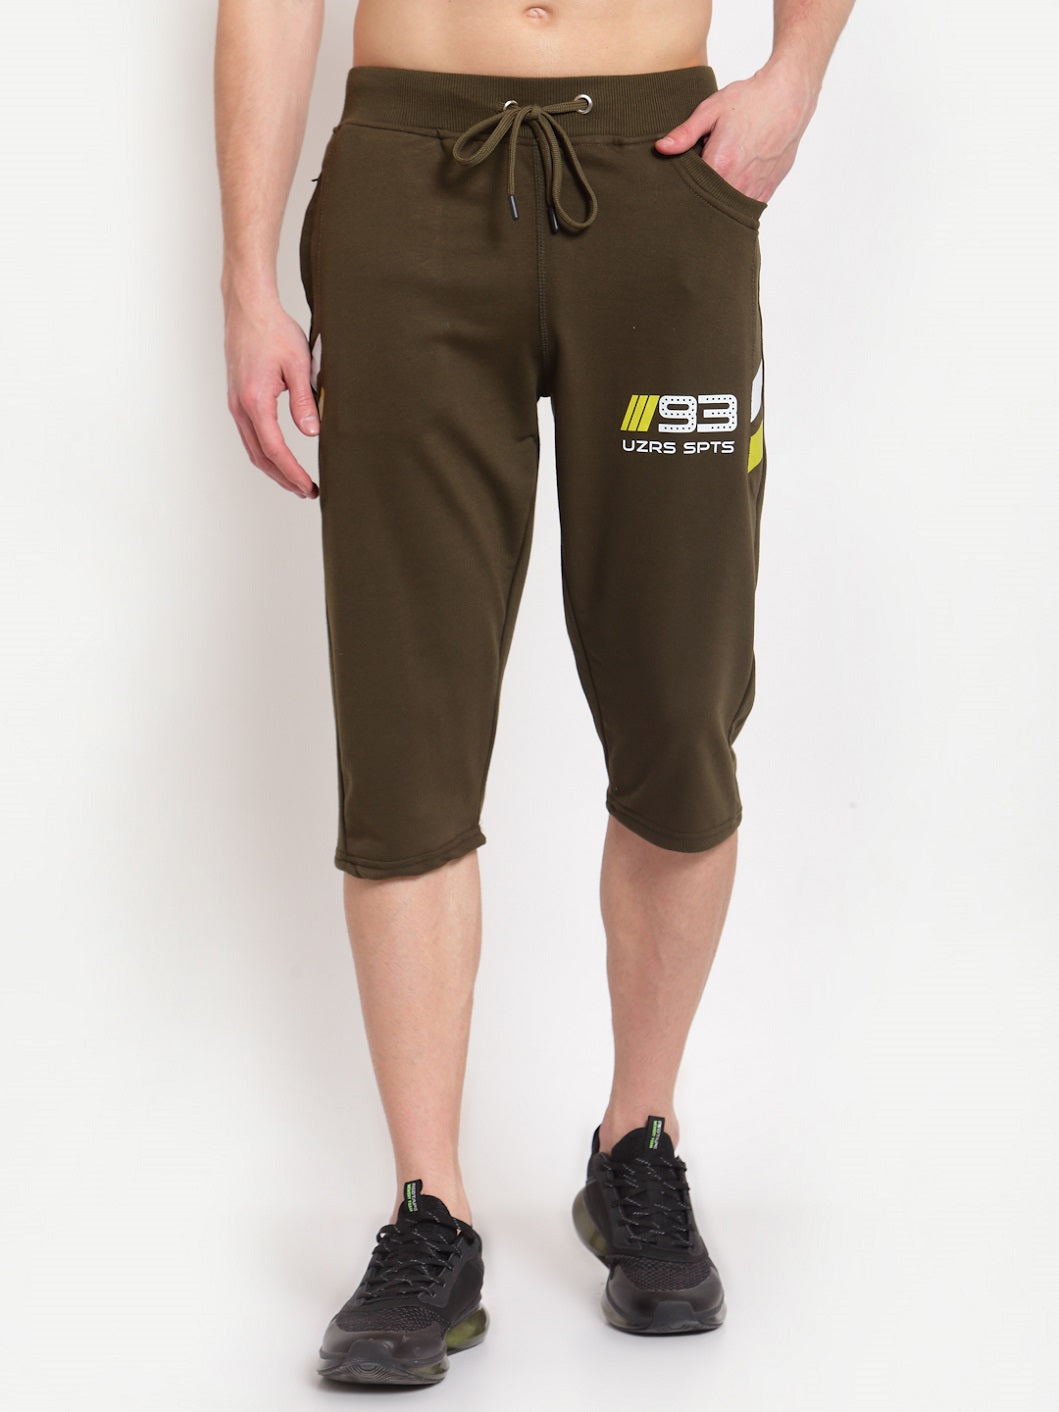 Hfyihgf Men's Cotton Casual Sweat Shorts 3/4 Jogger Capri Pants Breathable  Below Knee Athletic Track Short Pants with Pockets(Gray,XXL) - Walmart.com